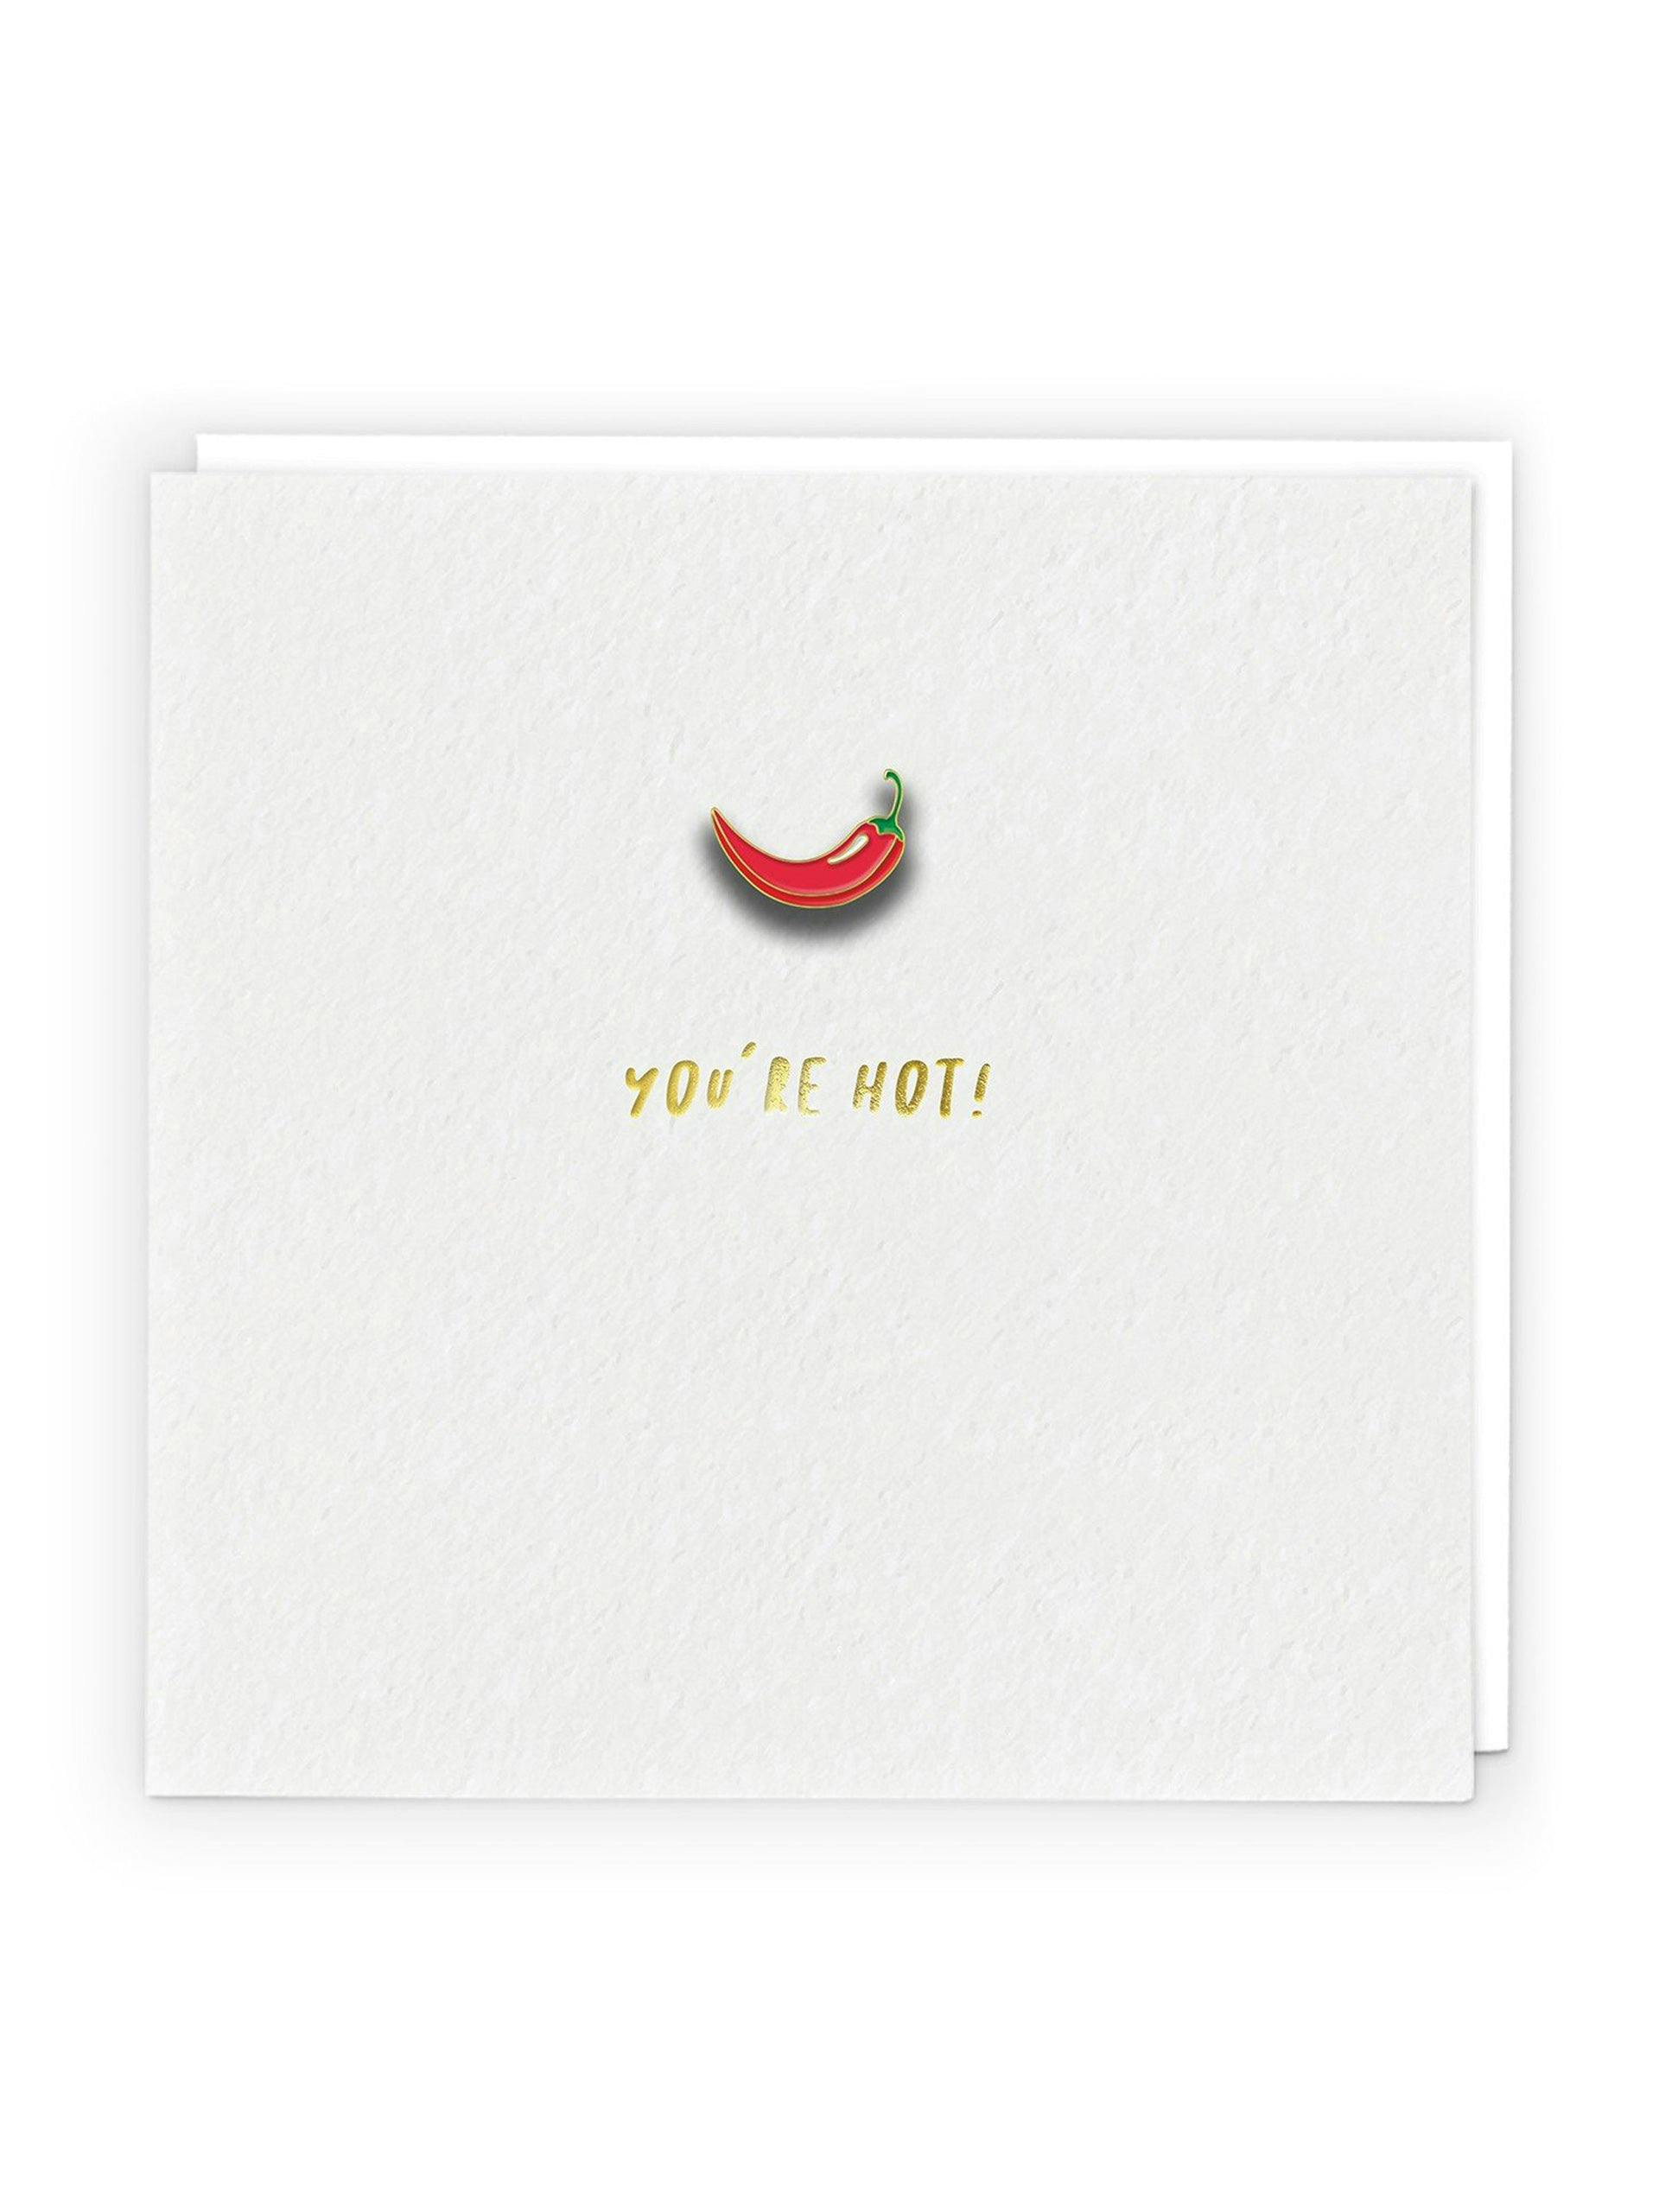 You're hot' pin card